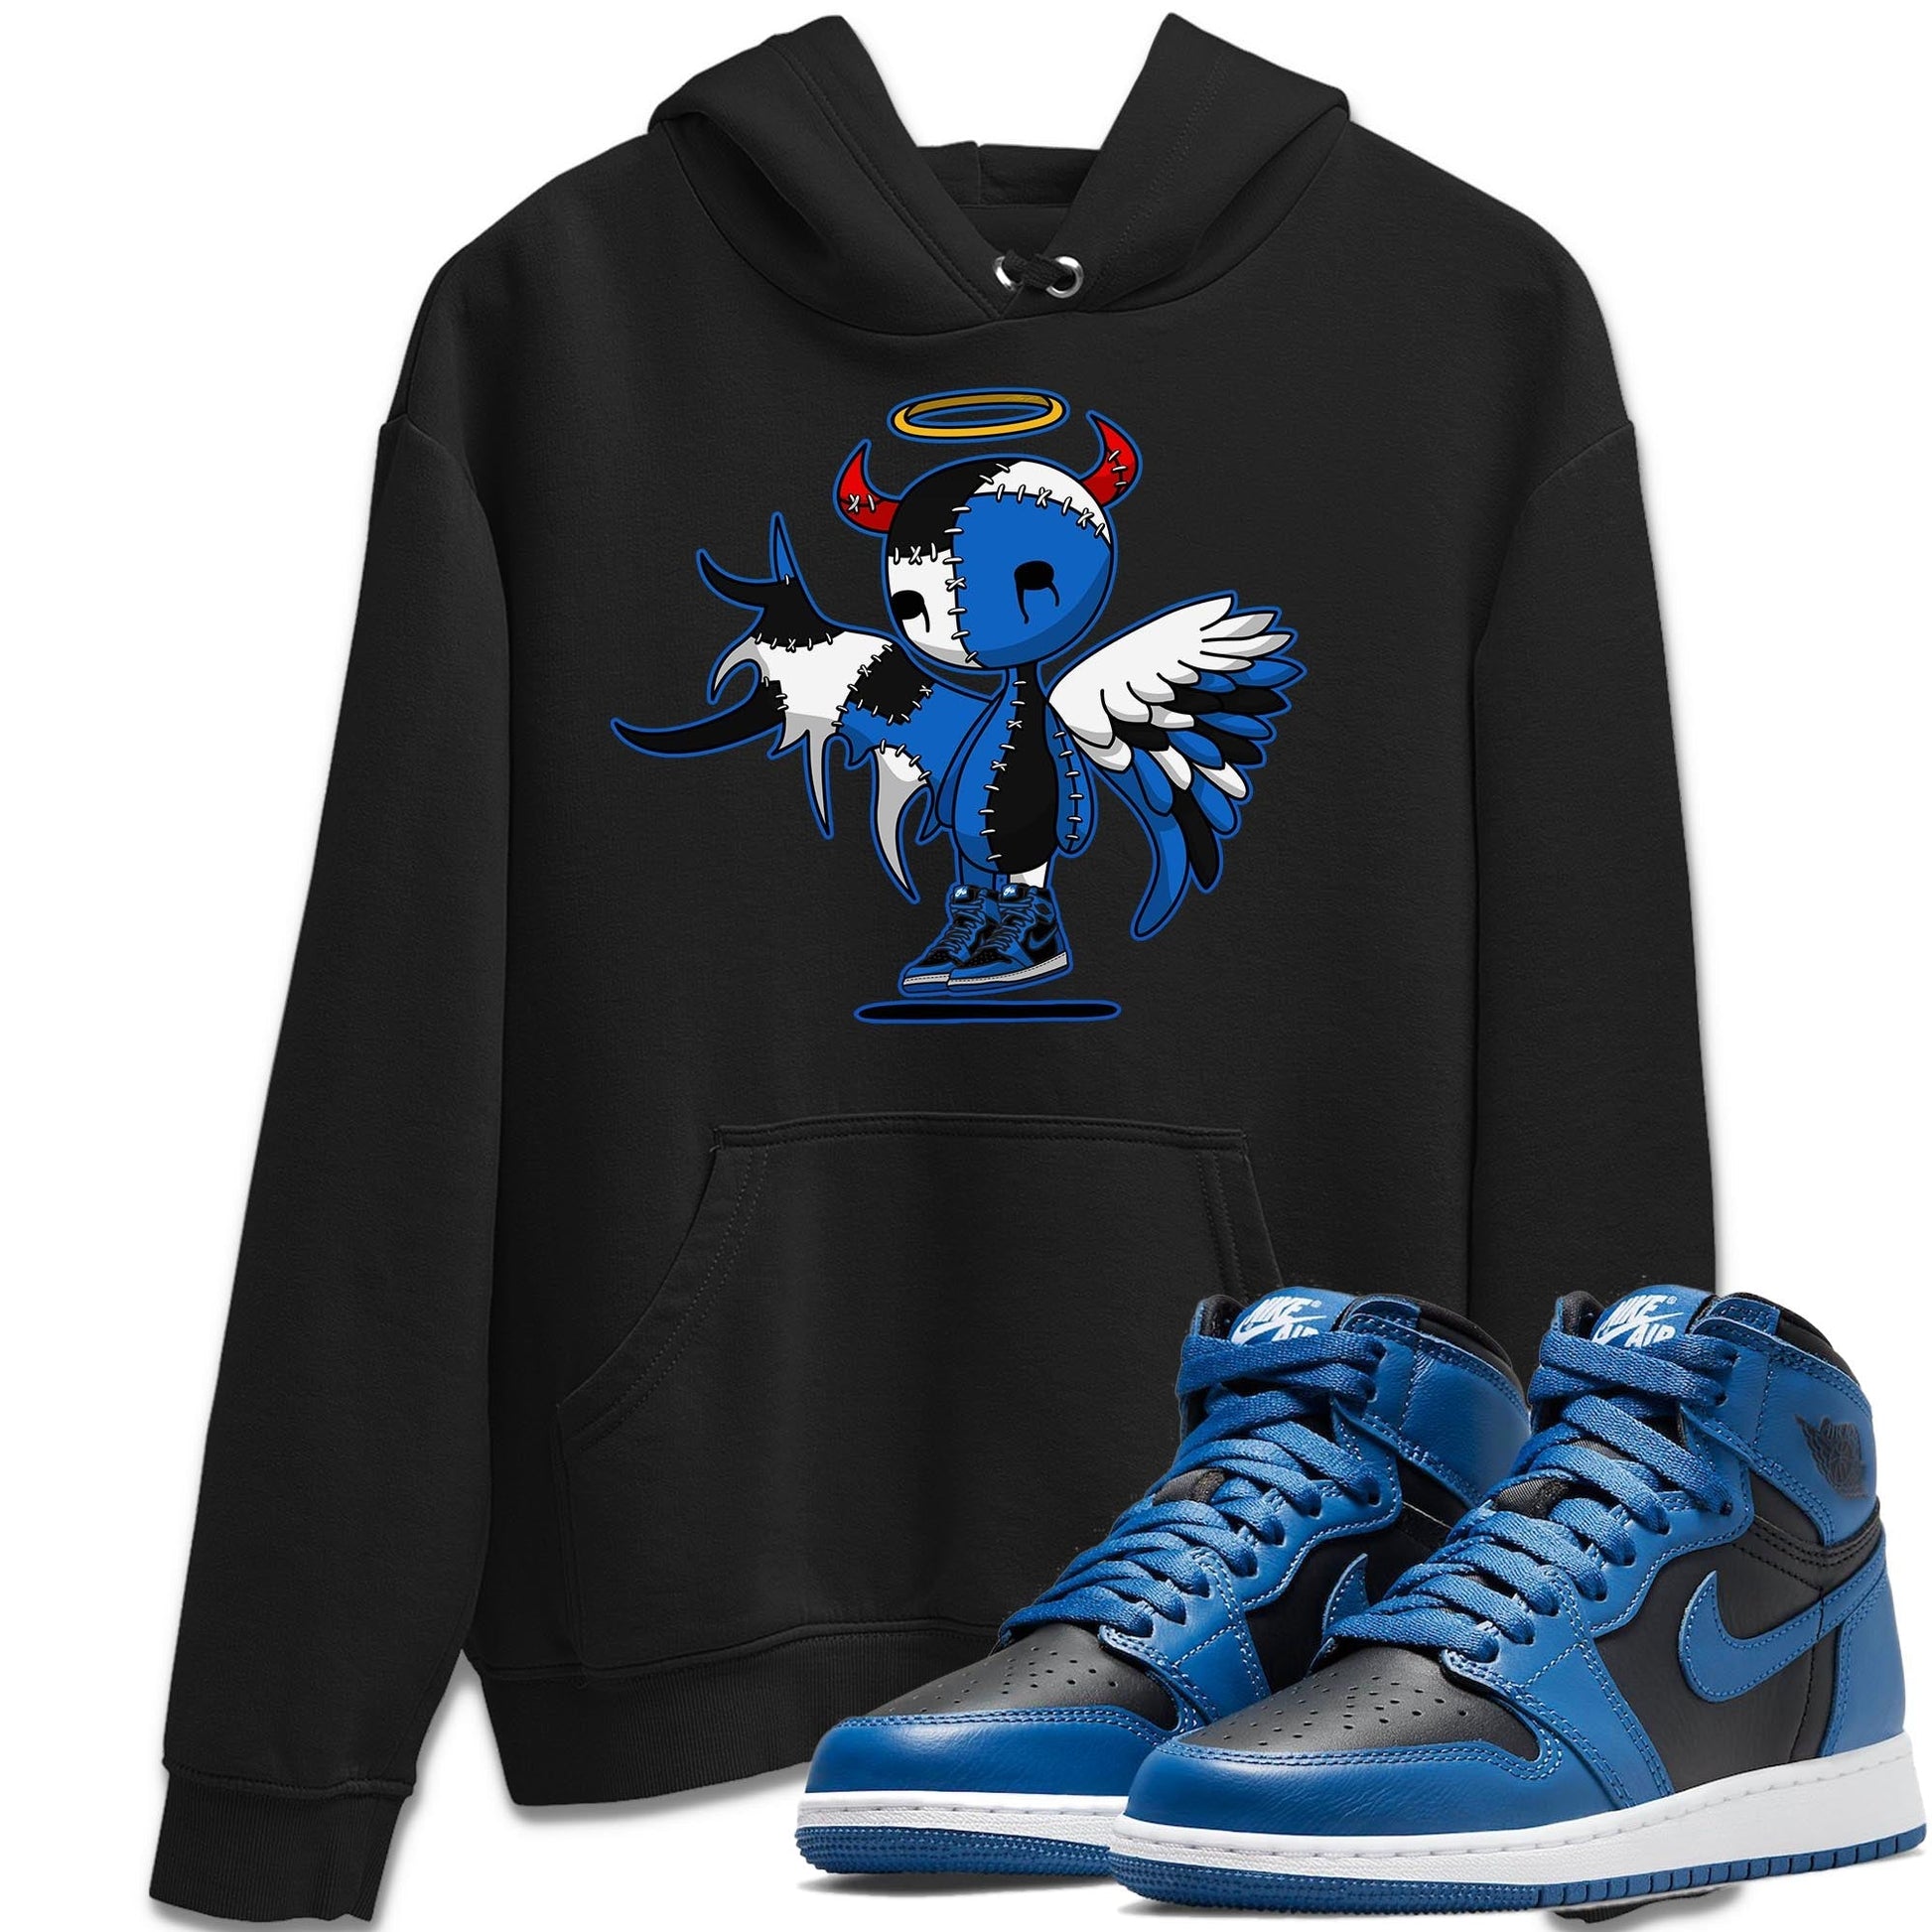 Jordan 1 Dark Marina Blue Sneaker Match Tees Devil Angel Sneaker Tees Jordan 1 Dark Marina Blue Sneaker Release Tees Unisex Shirts